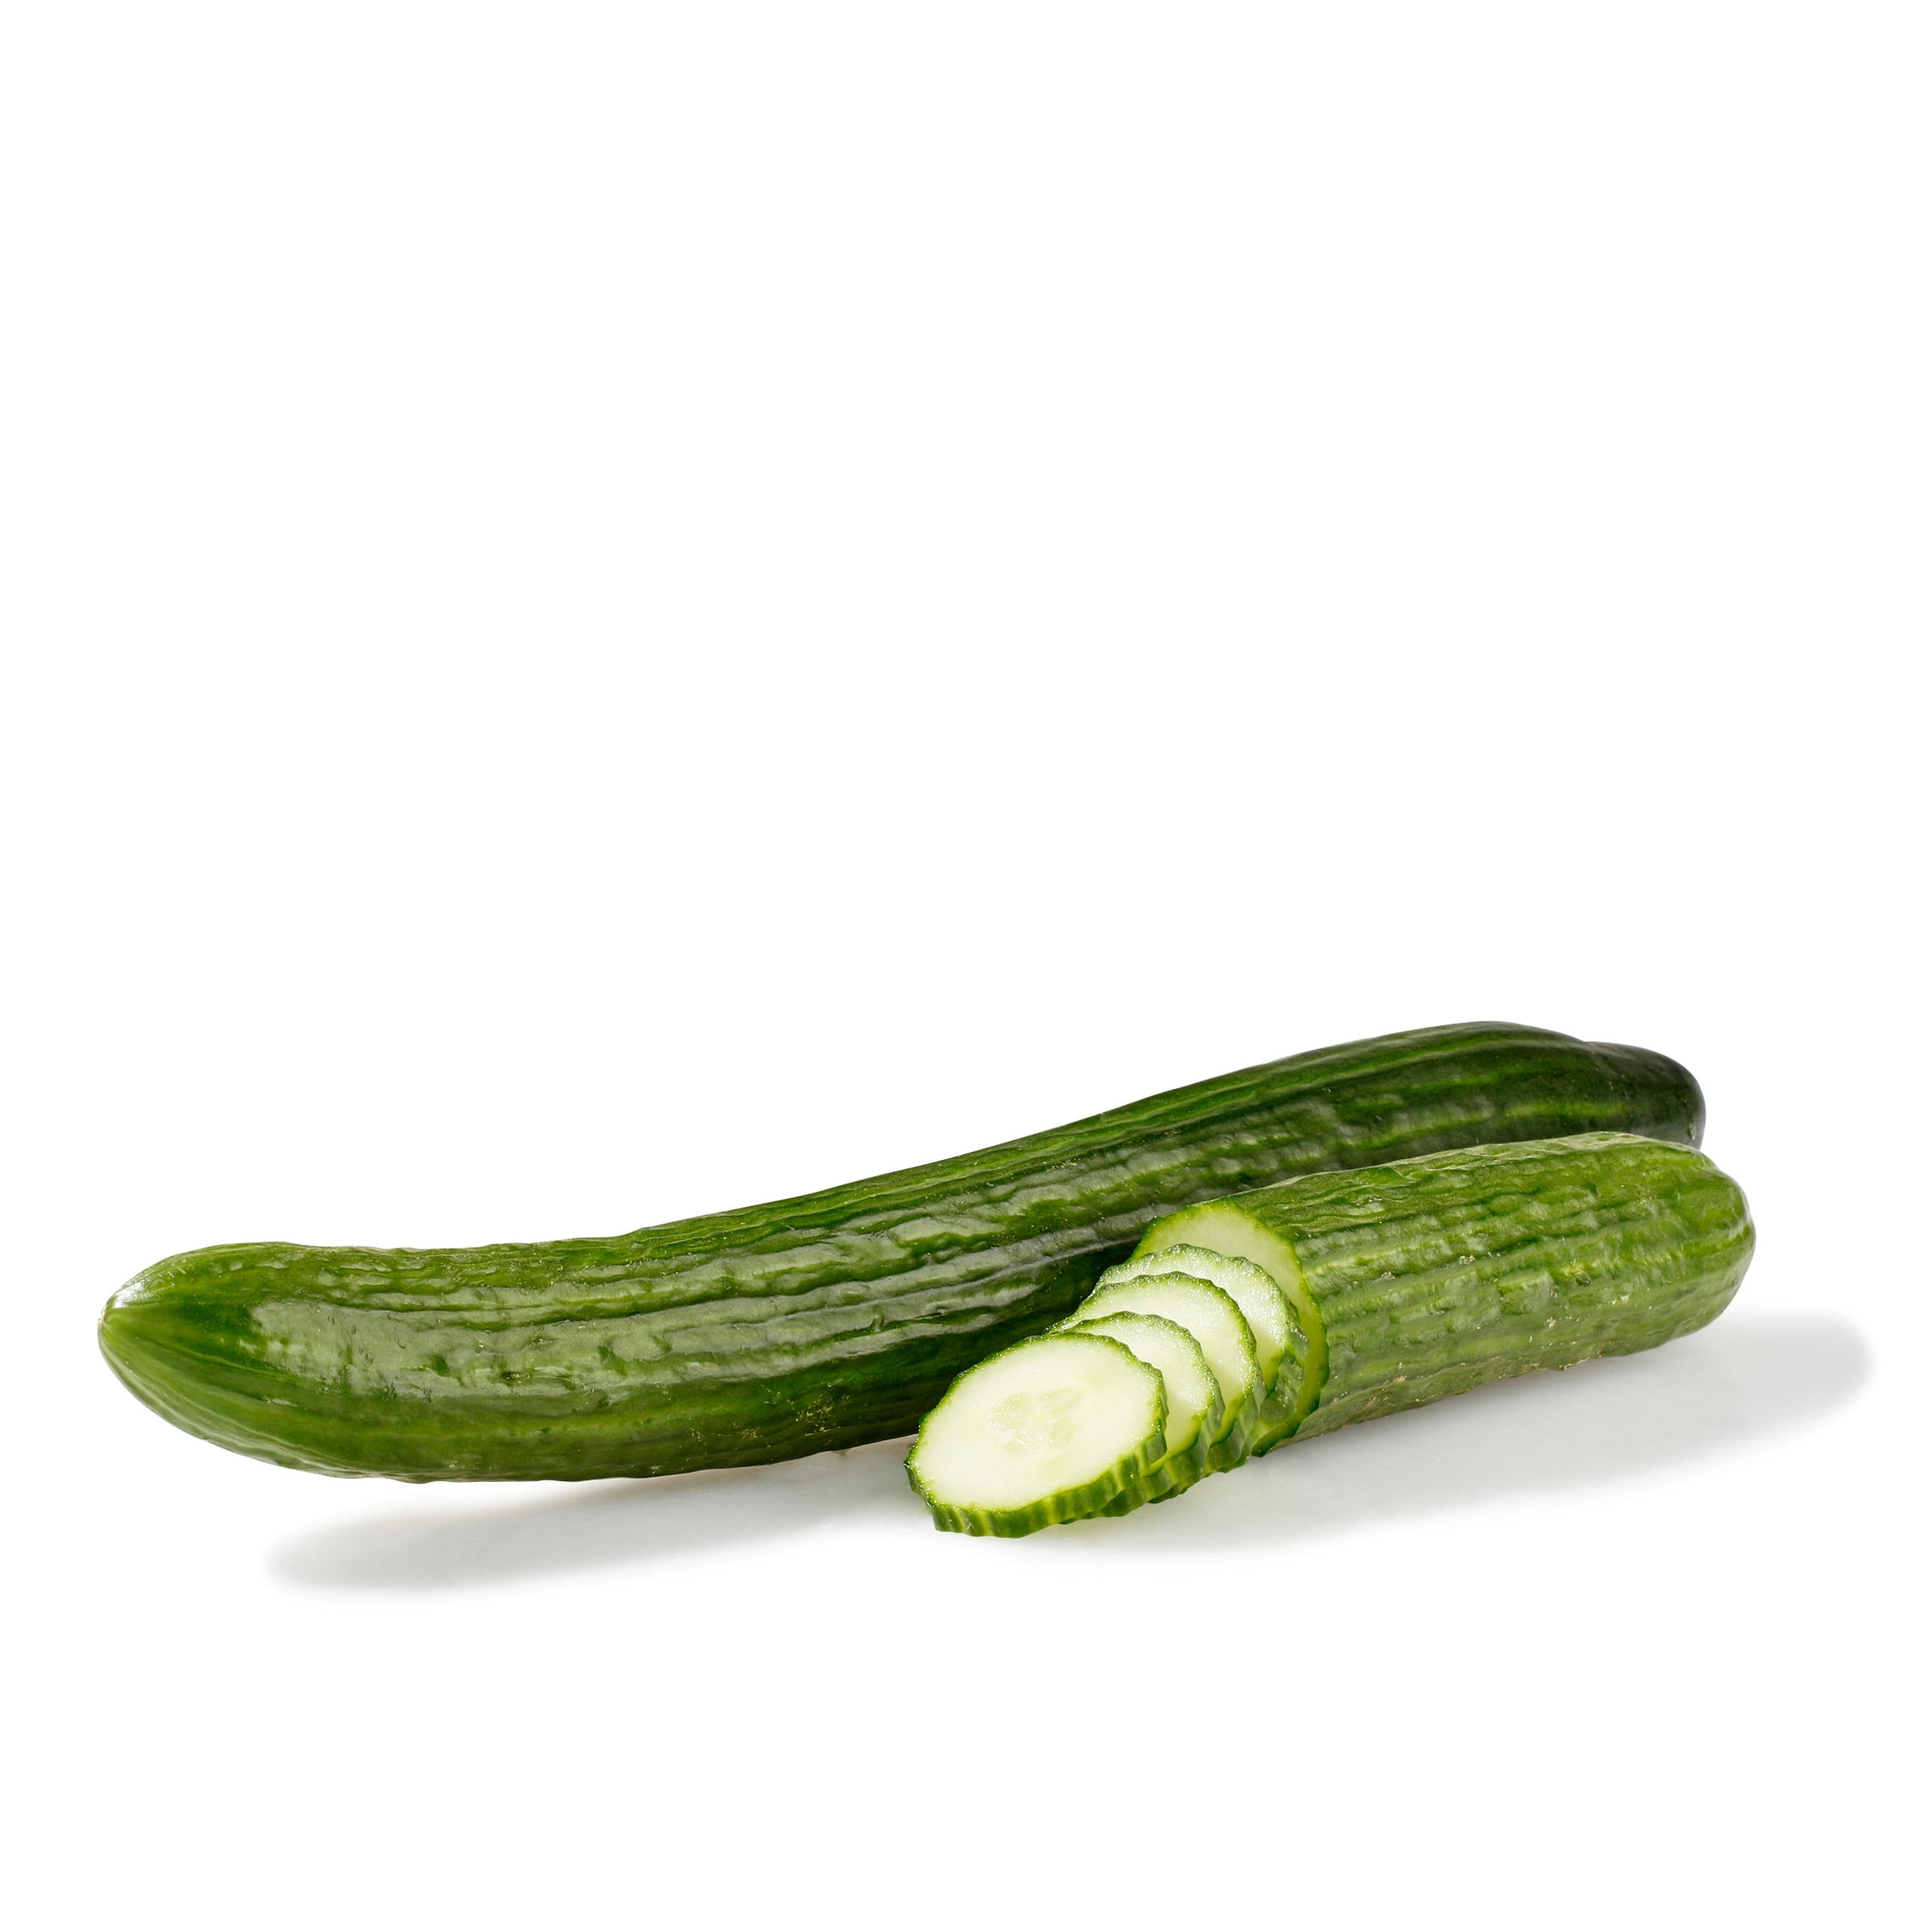 Organic Long English Cucumbers, 1 ct - Kroger